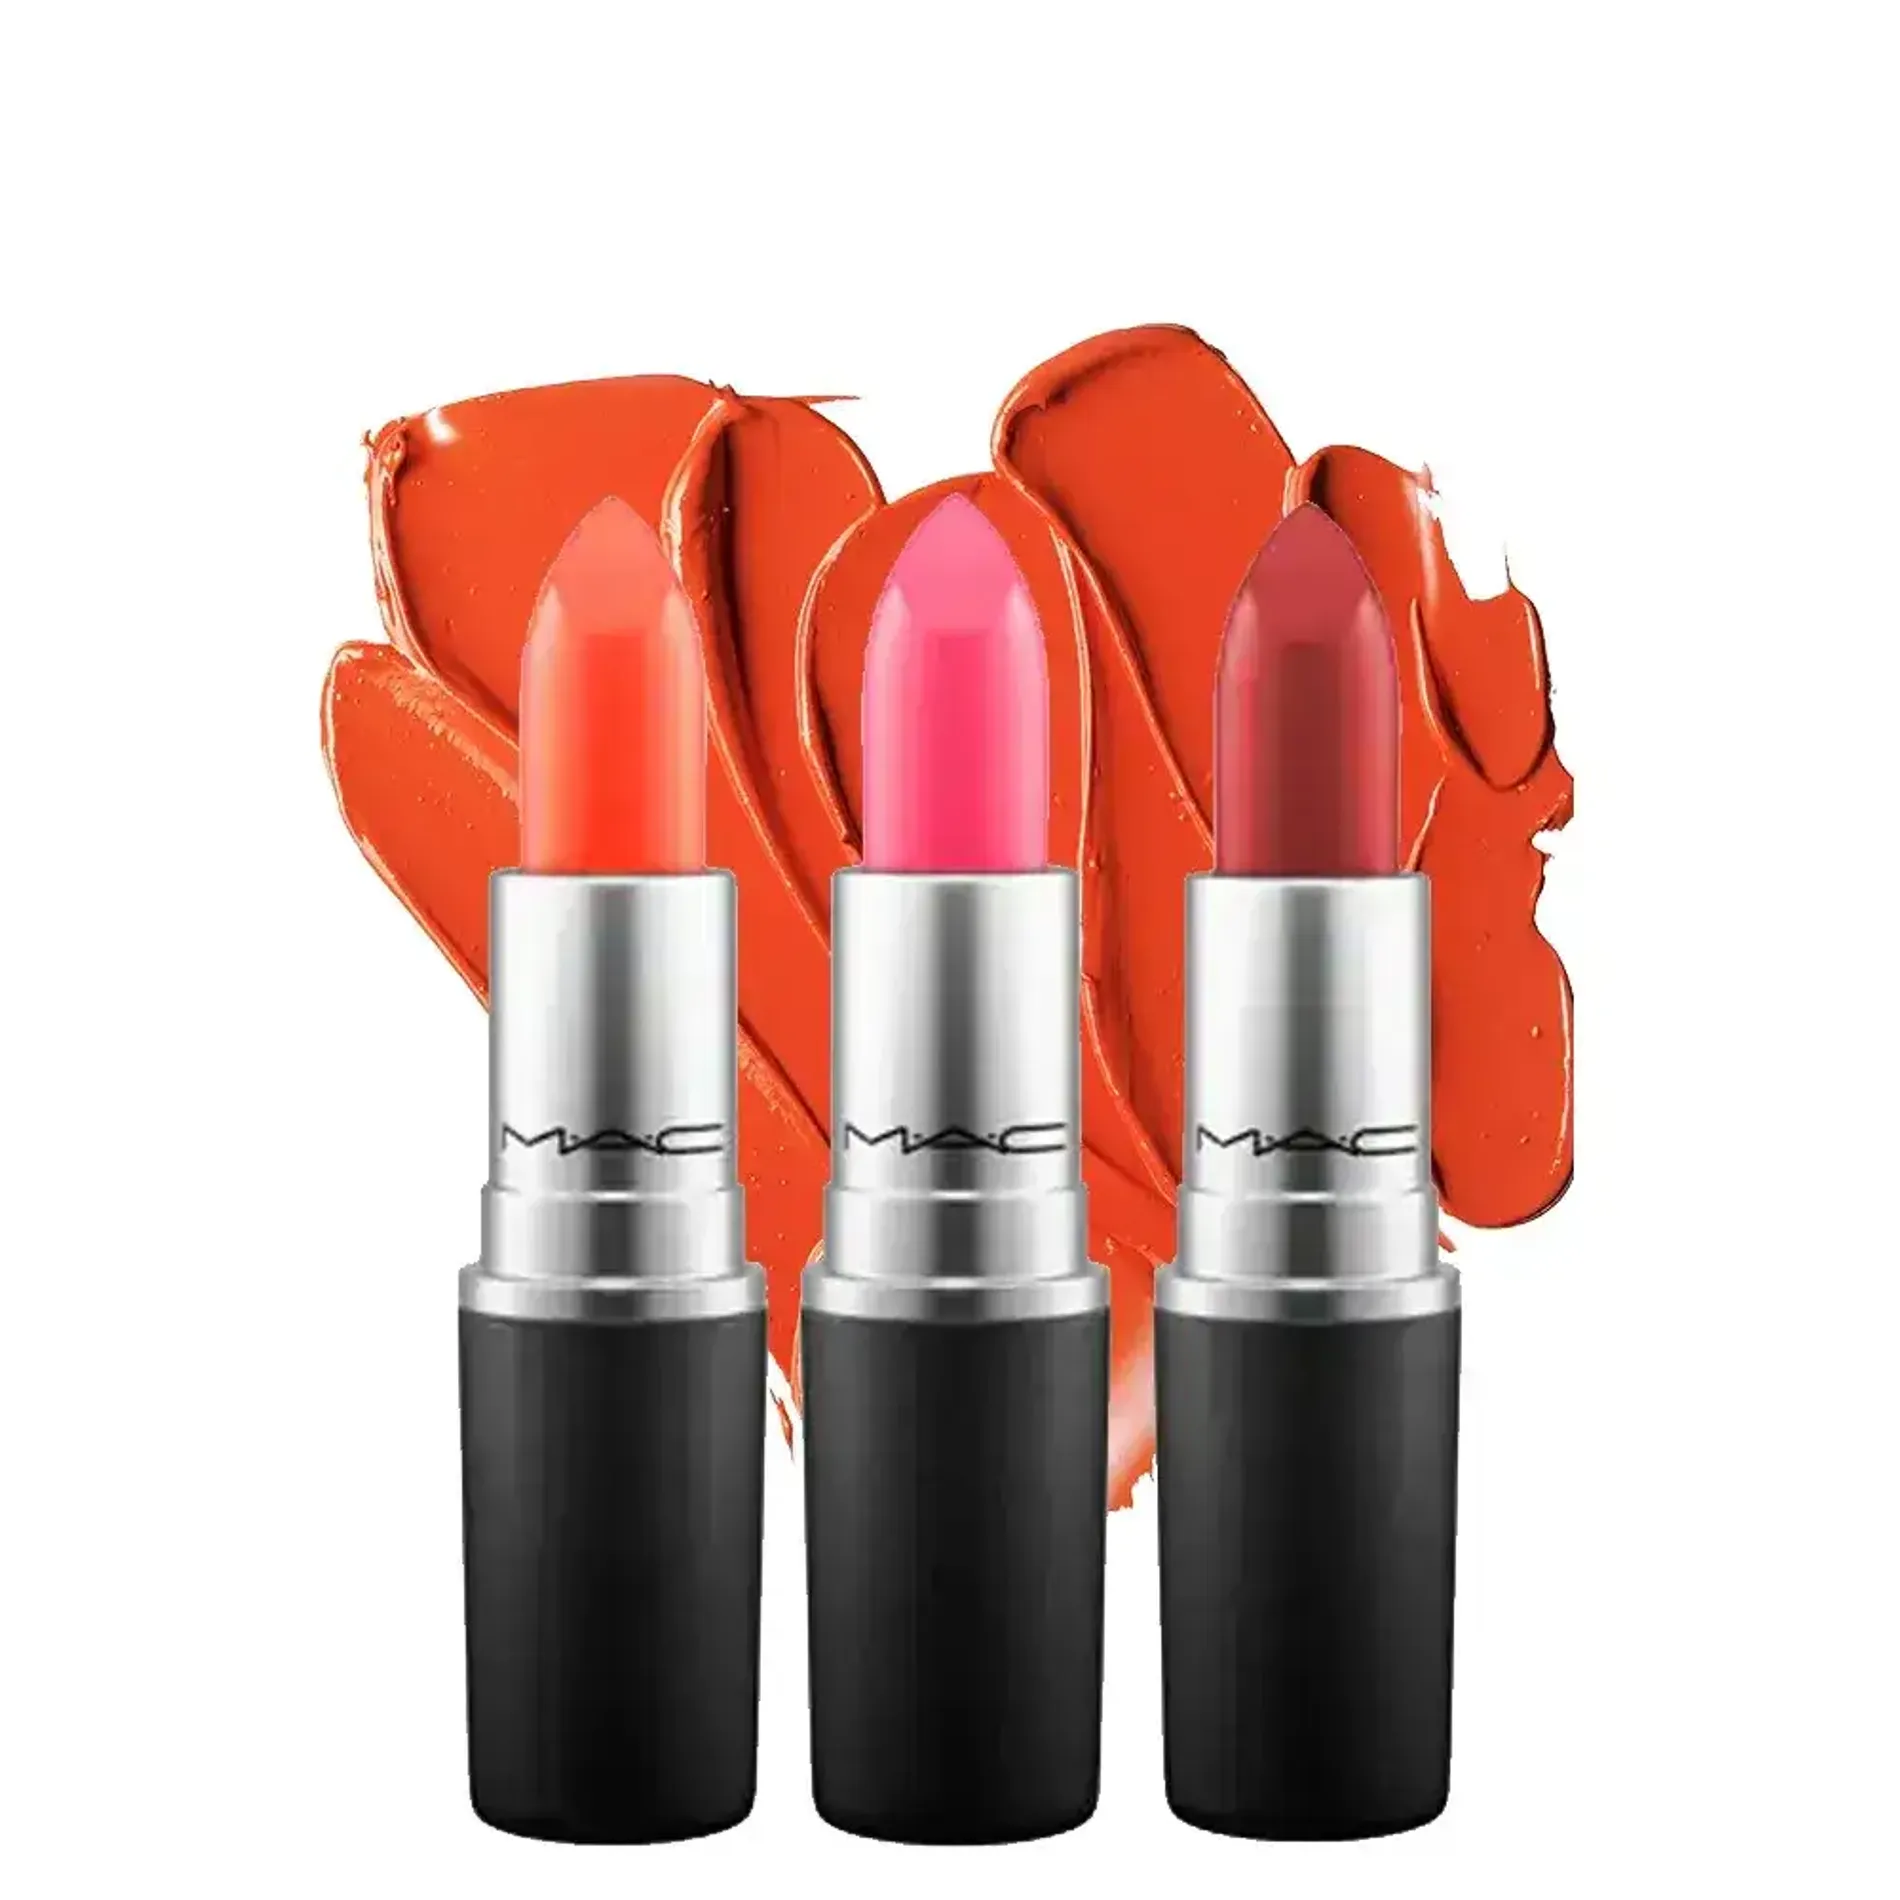 son-thoi-mac-amplified-creme-lipstick-3g-1